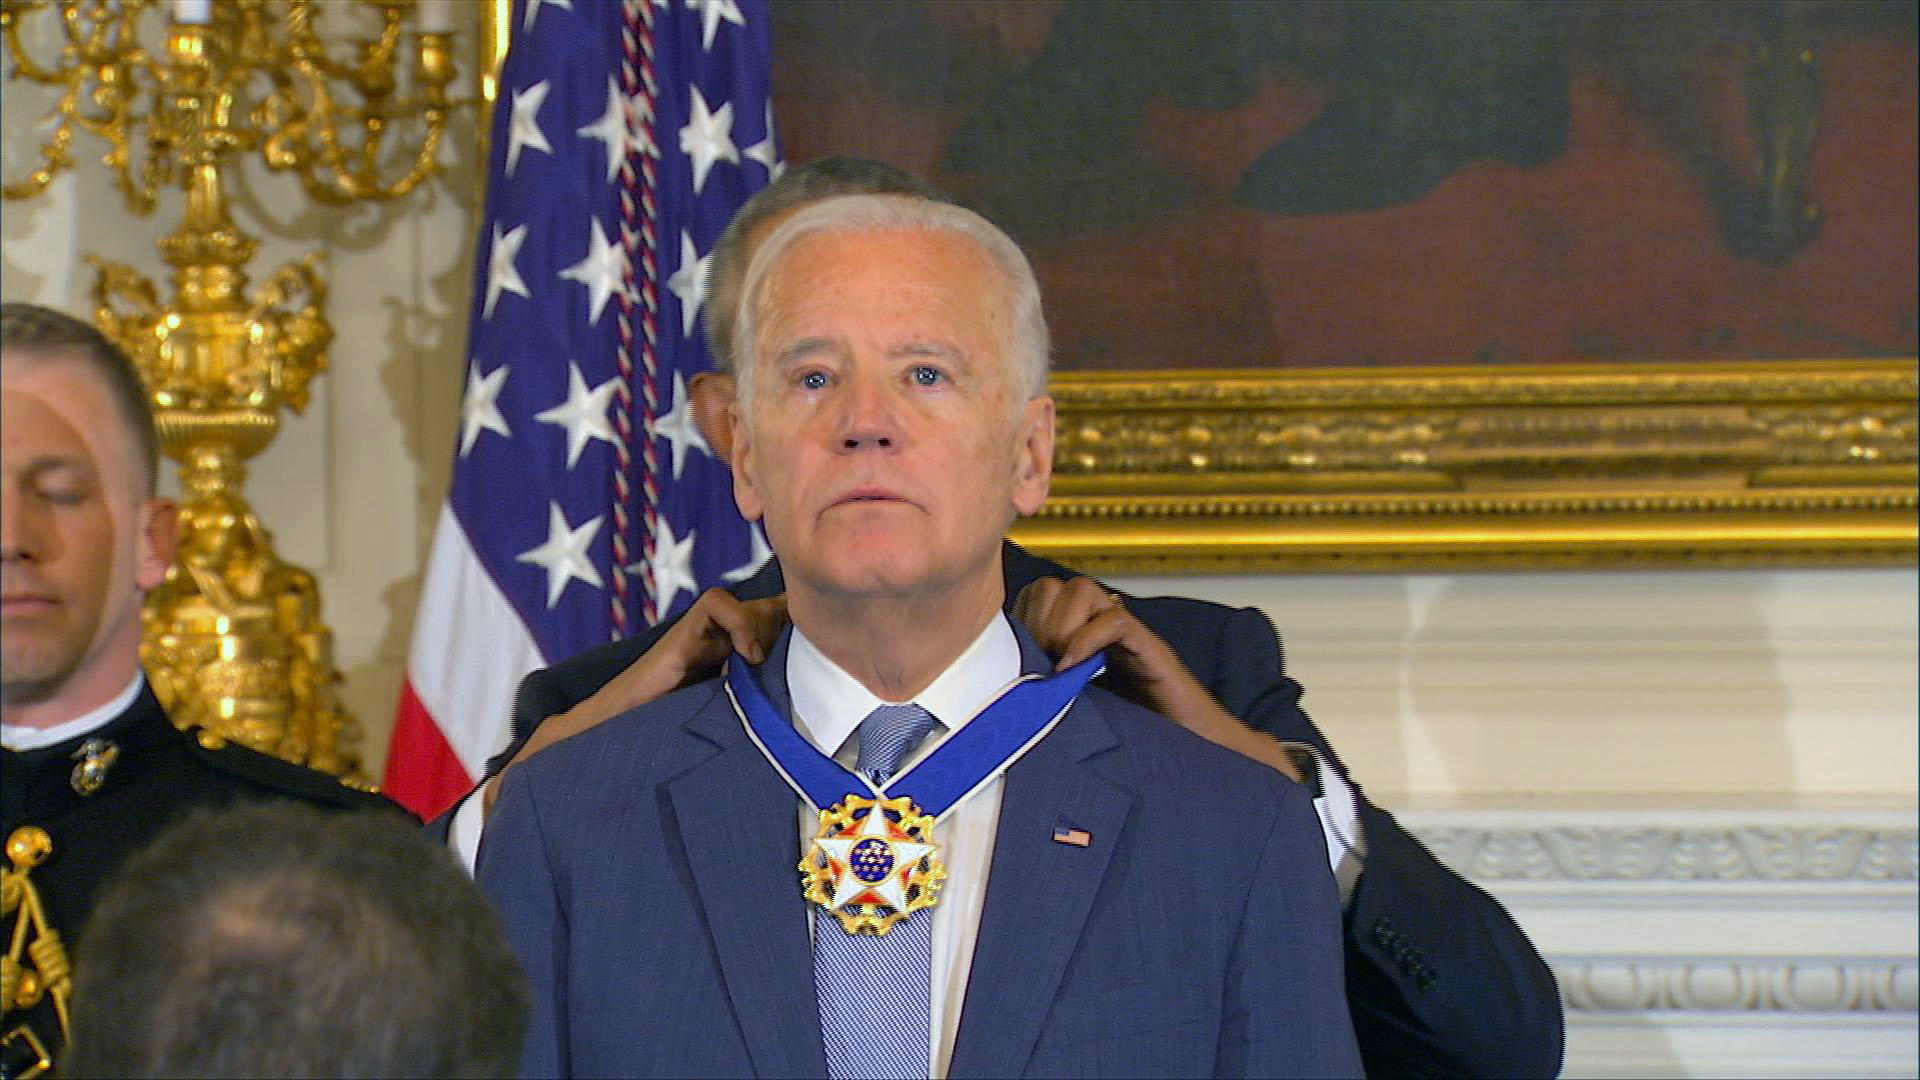 Biden Medal of Freedom by President Obama - News